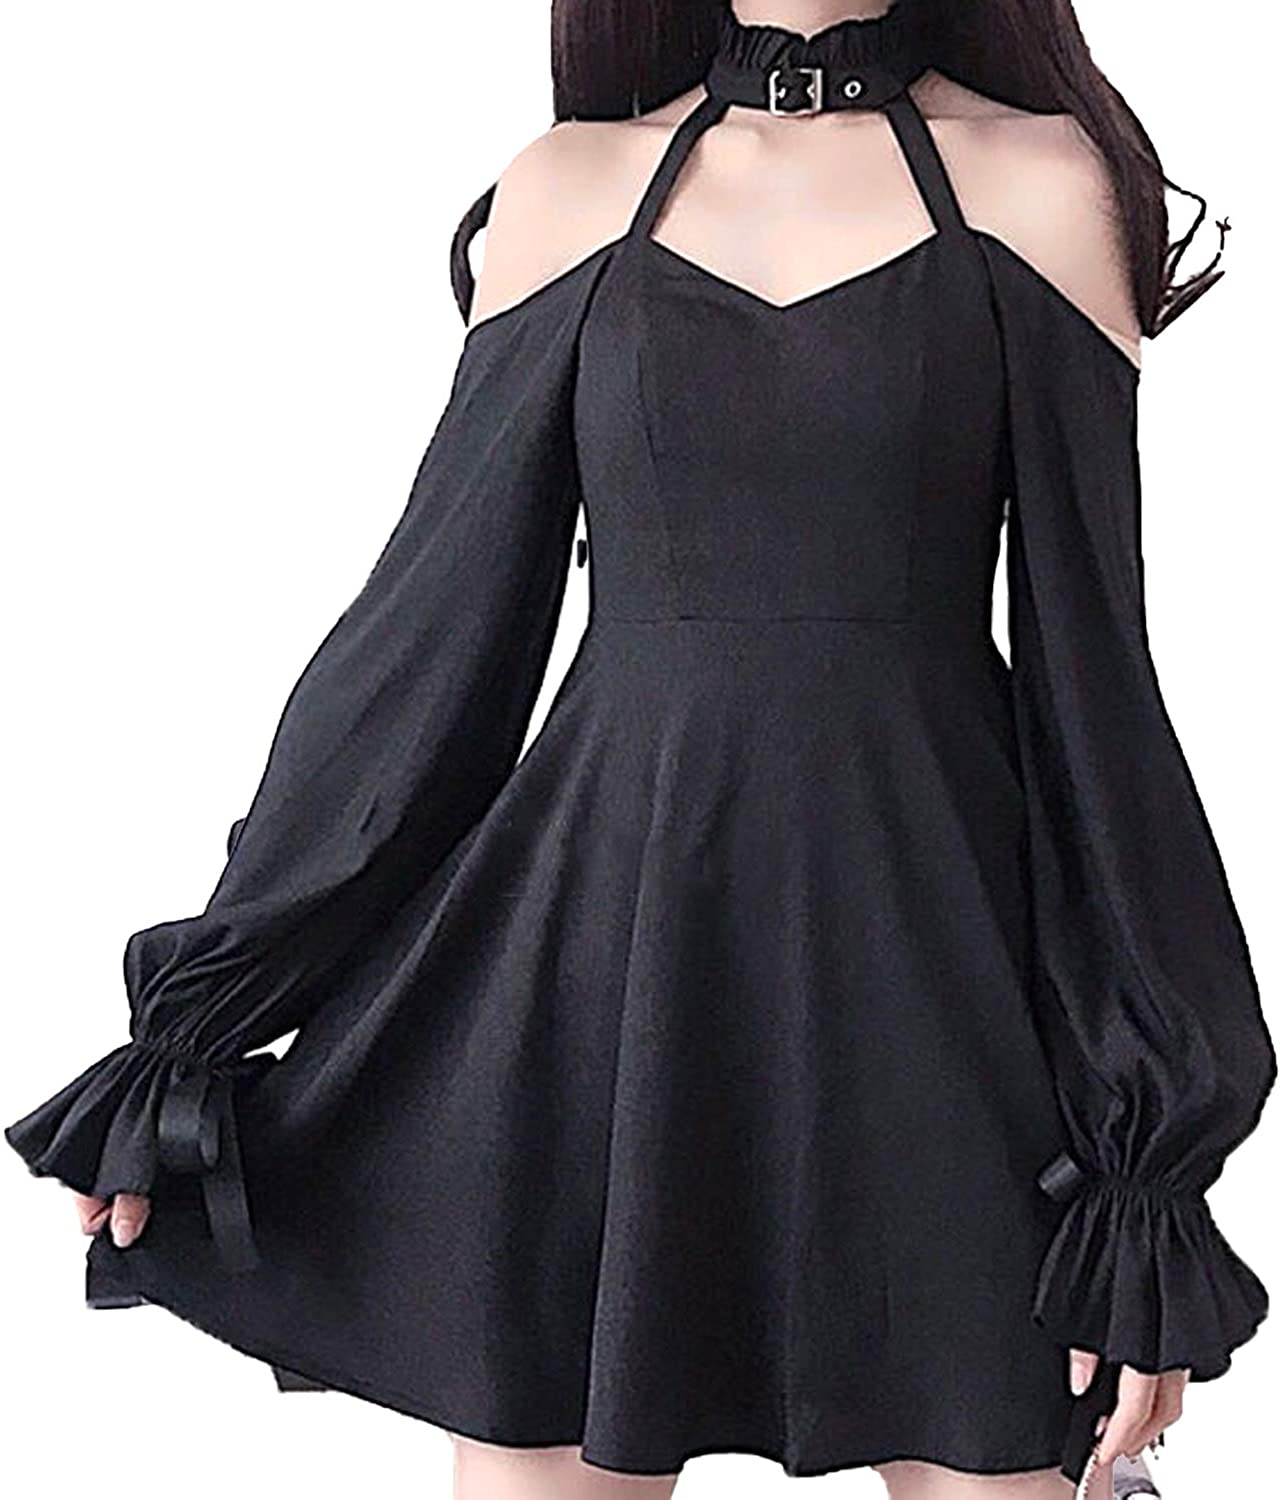 Kawaii Ruffle Off-Shoulder Long Sleeve Dress with Bowknot